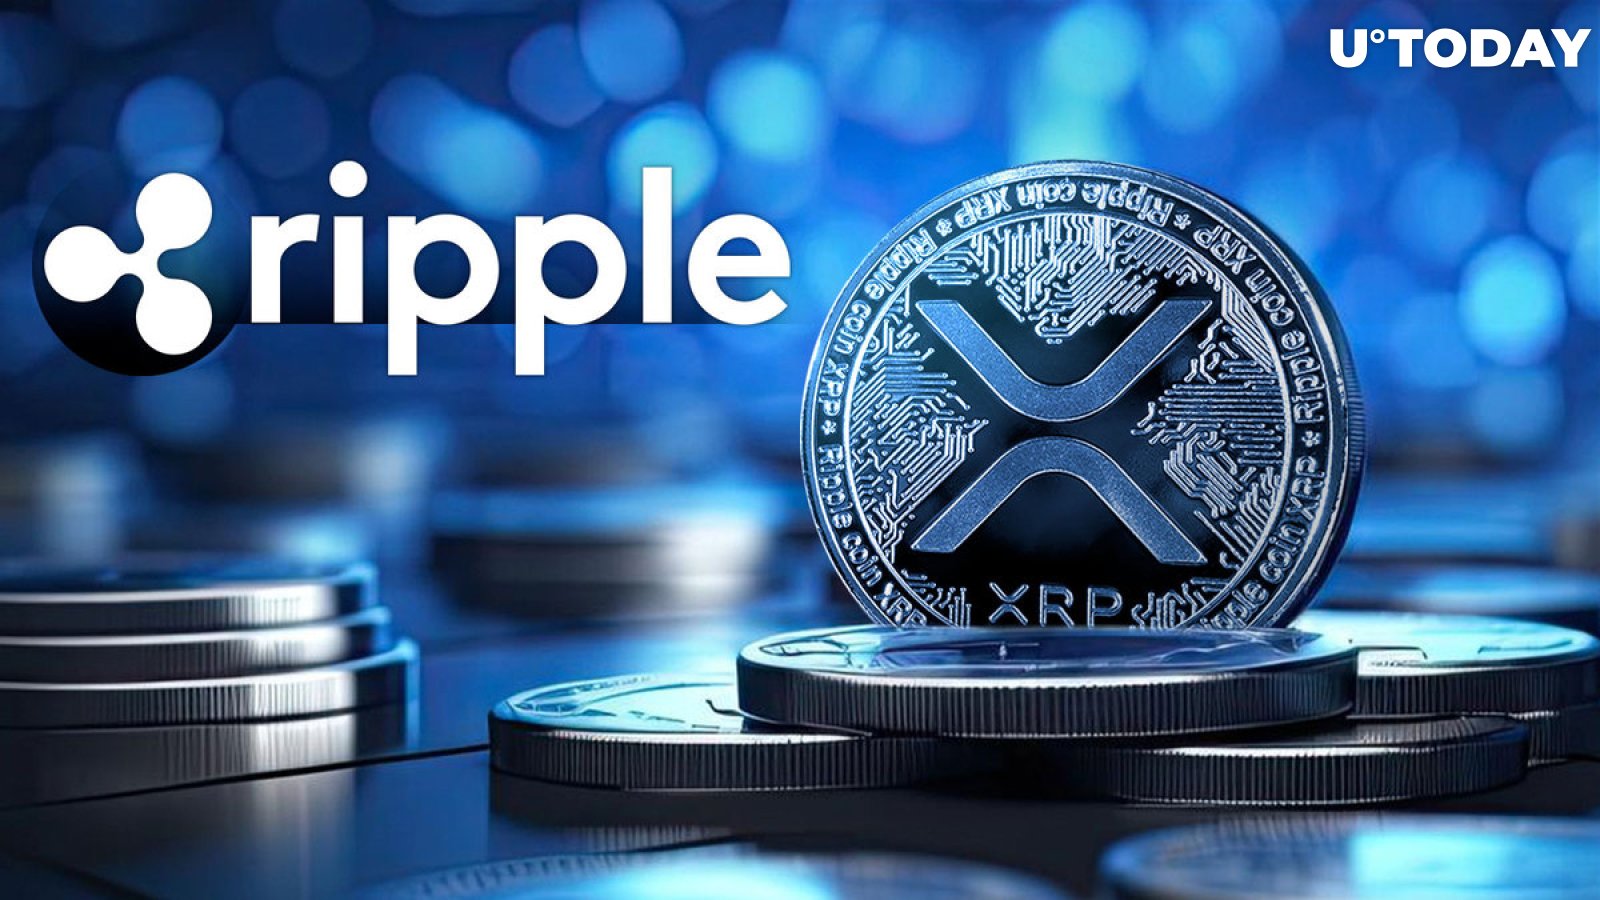 Ripple Transfers Astonishing XRP Sum, Here's Price Reaction